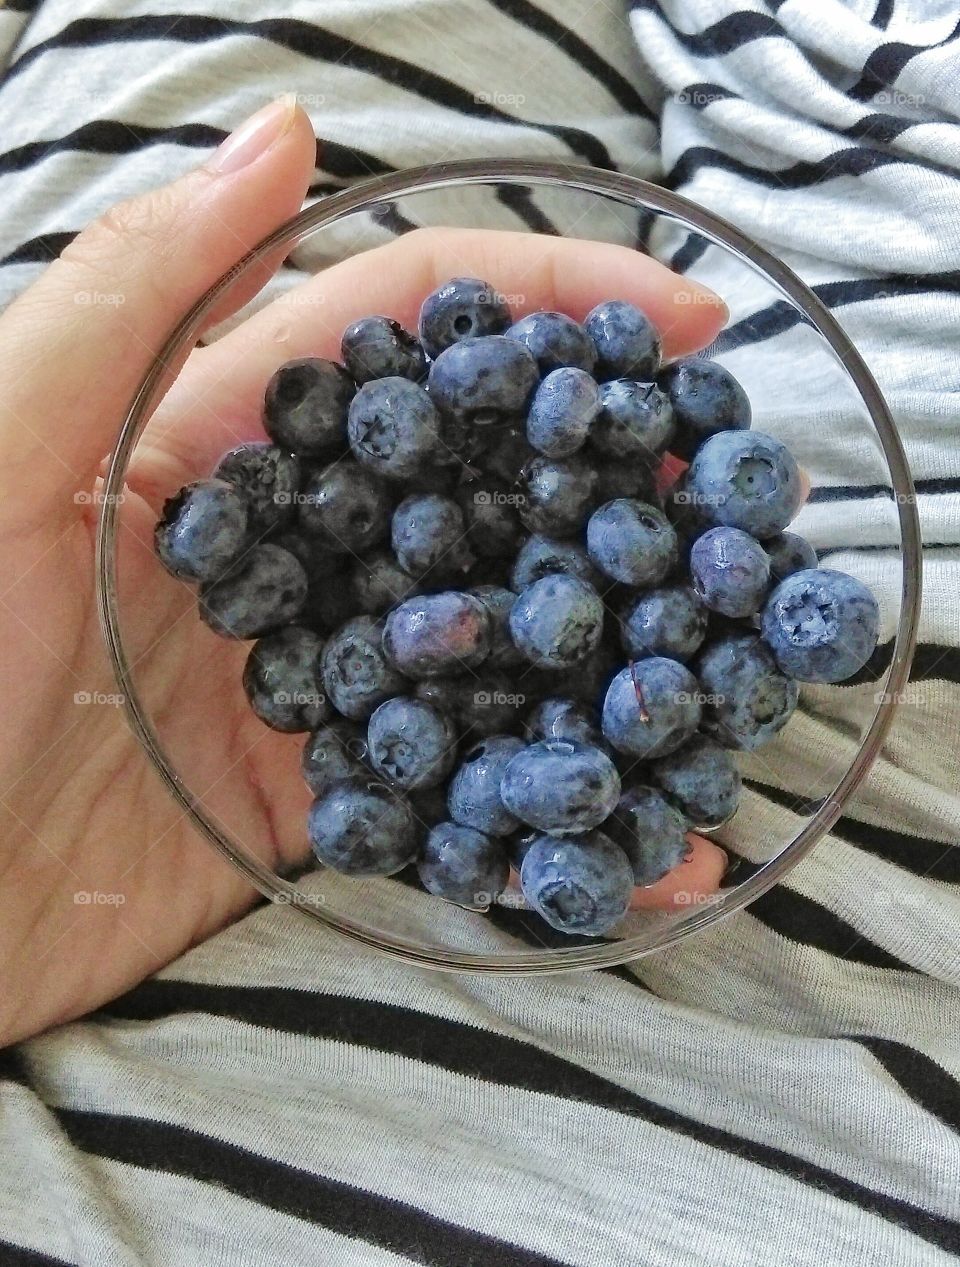 Blueberries. Blueberries